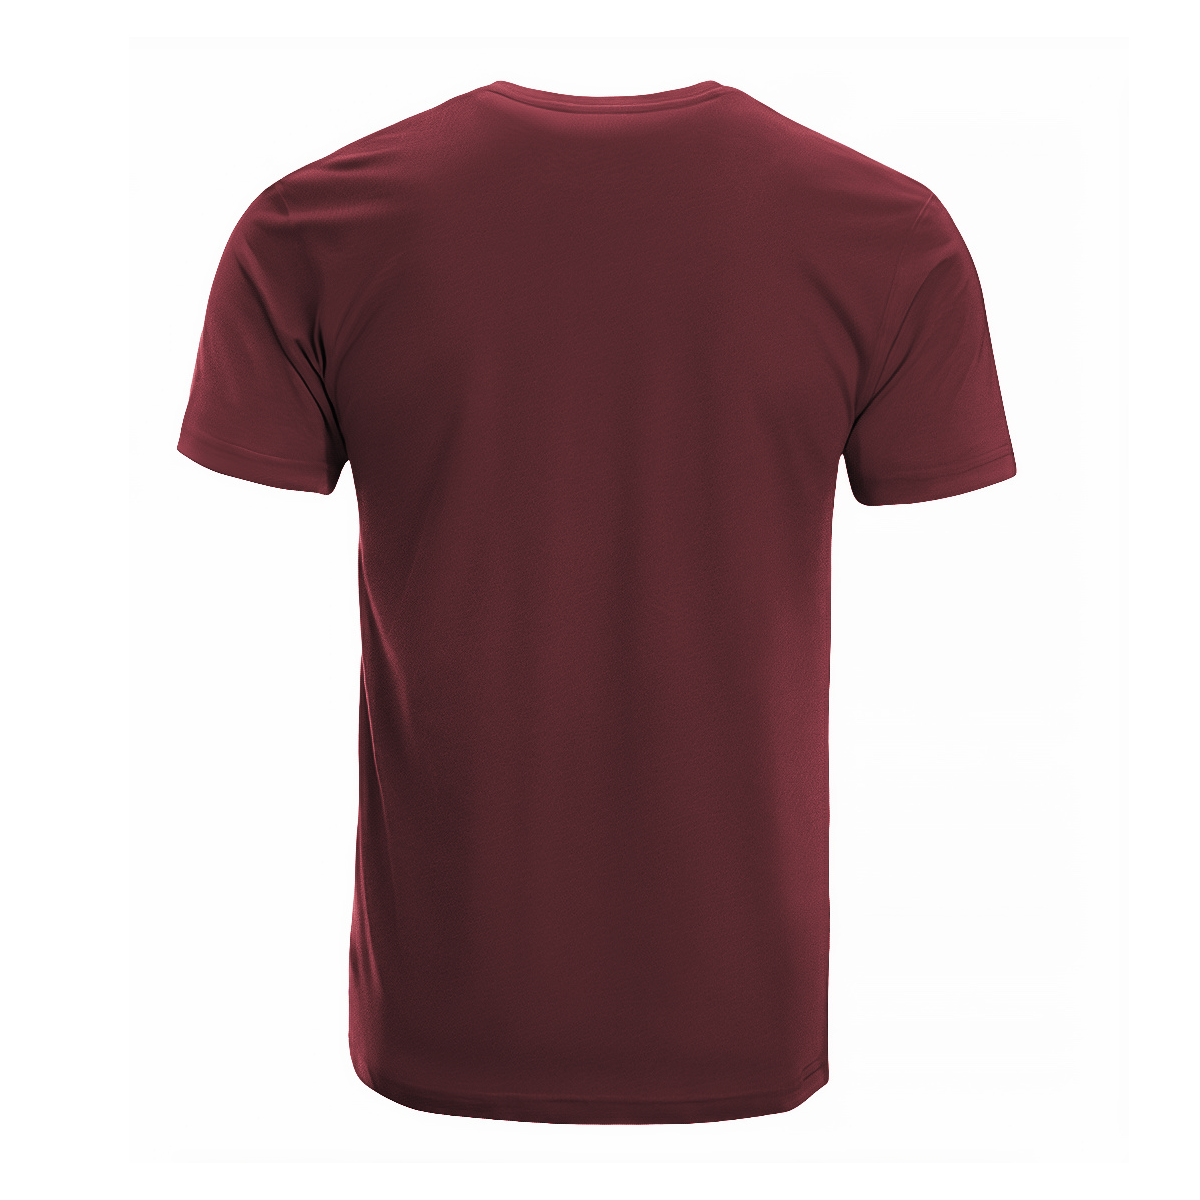 Bain Tartan Crest T-shirt - I'm not yelling style